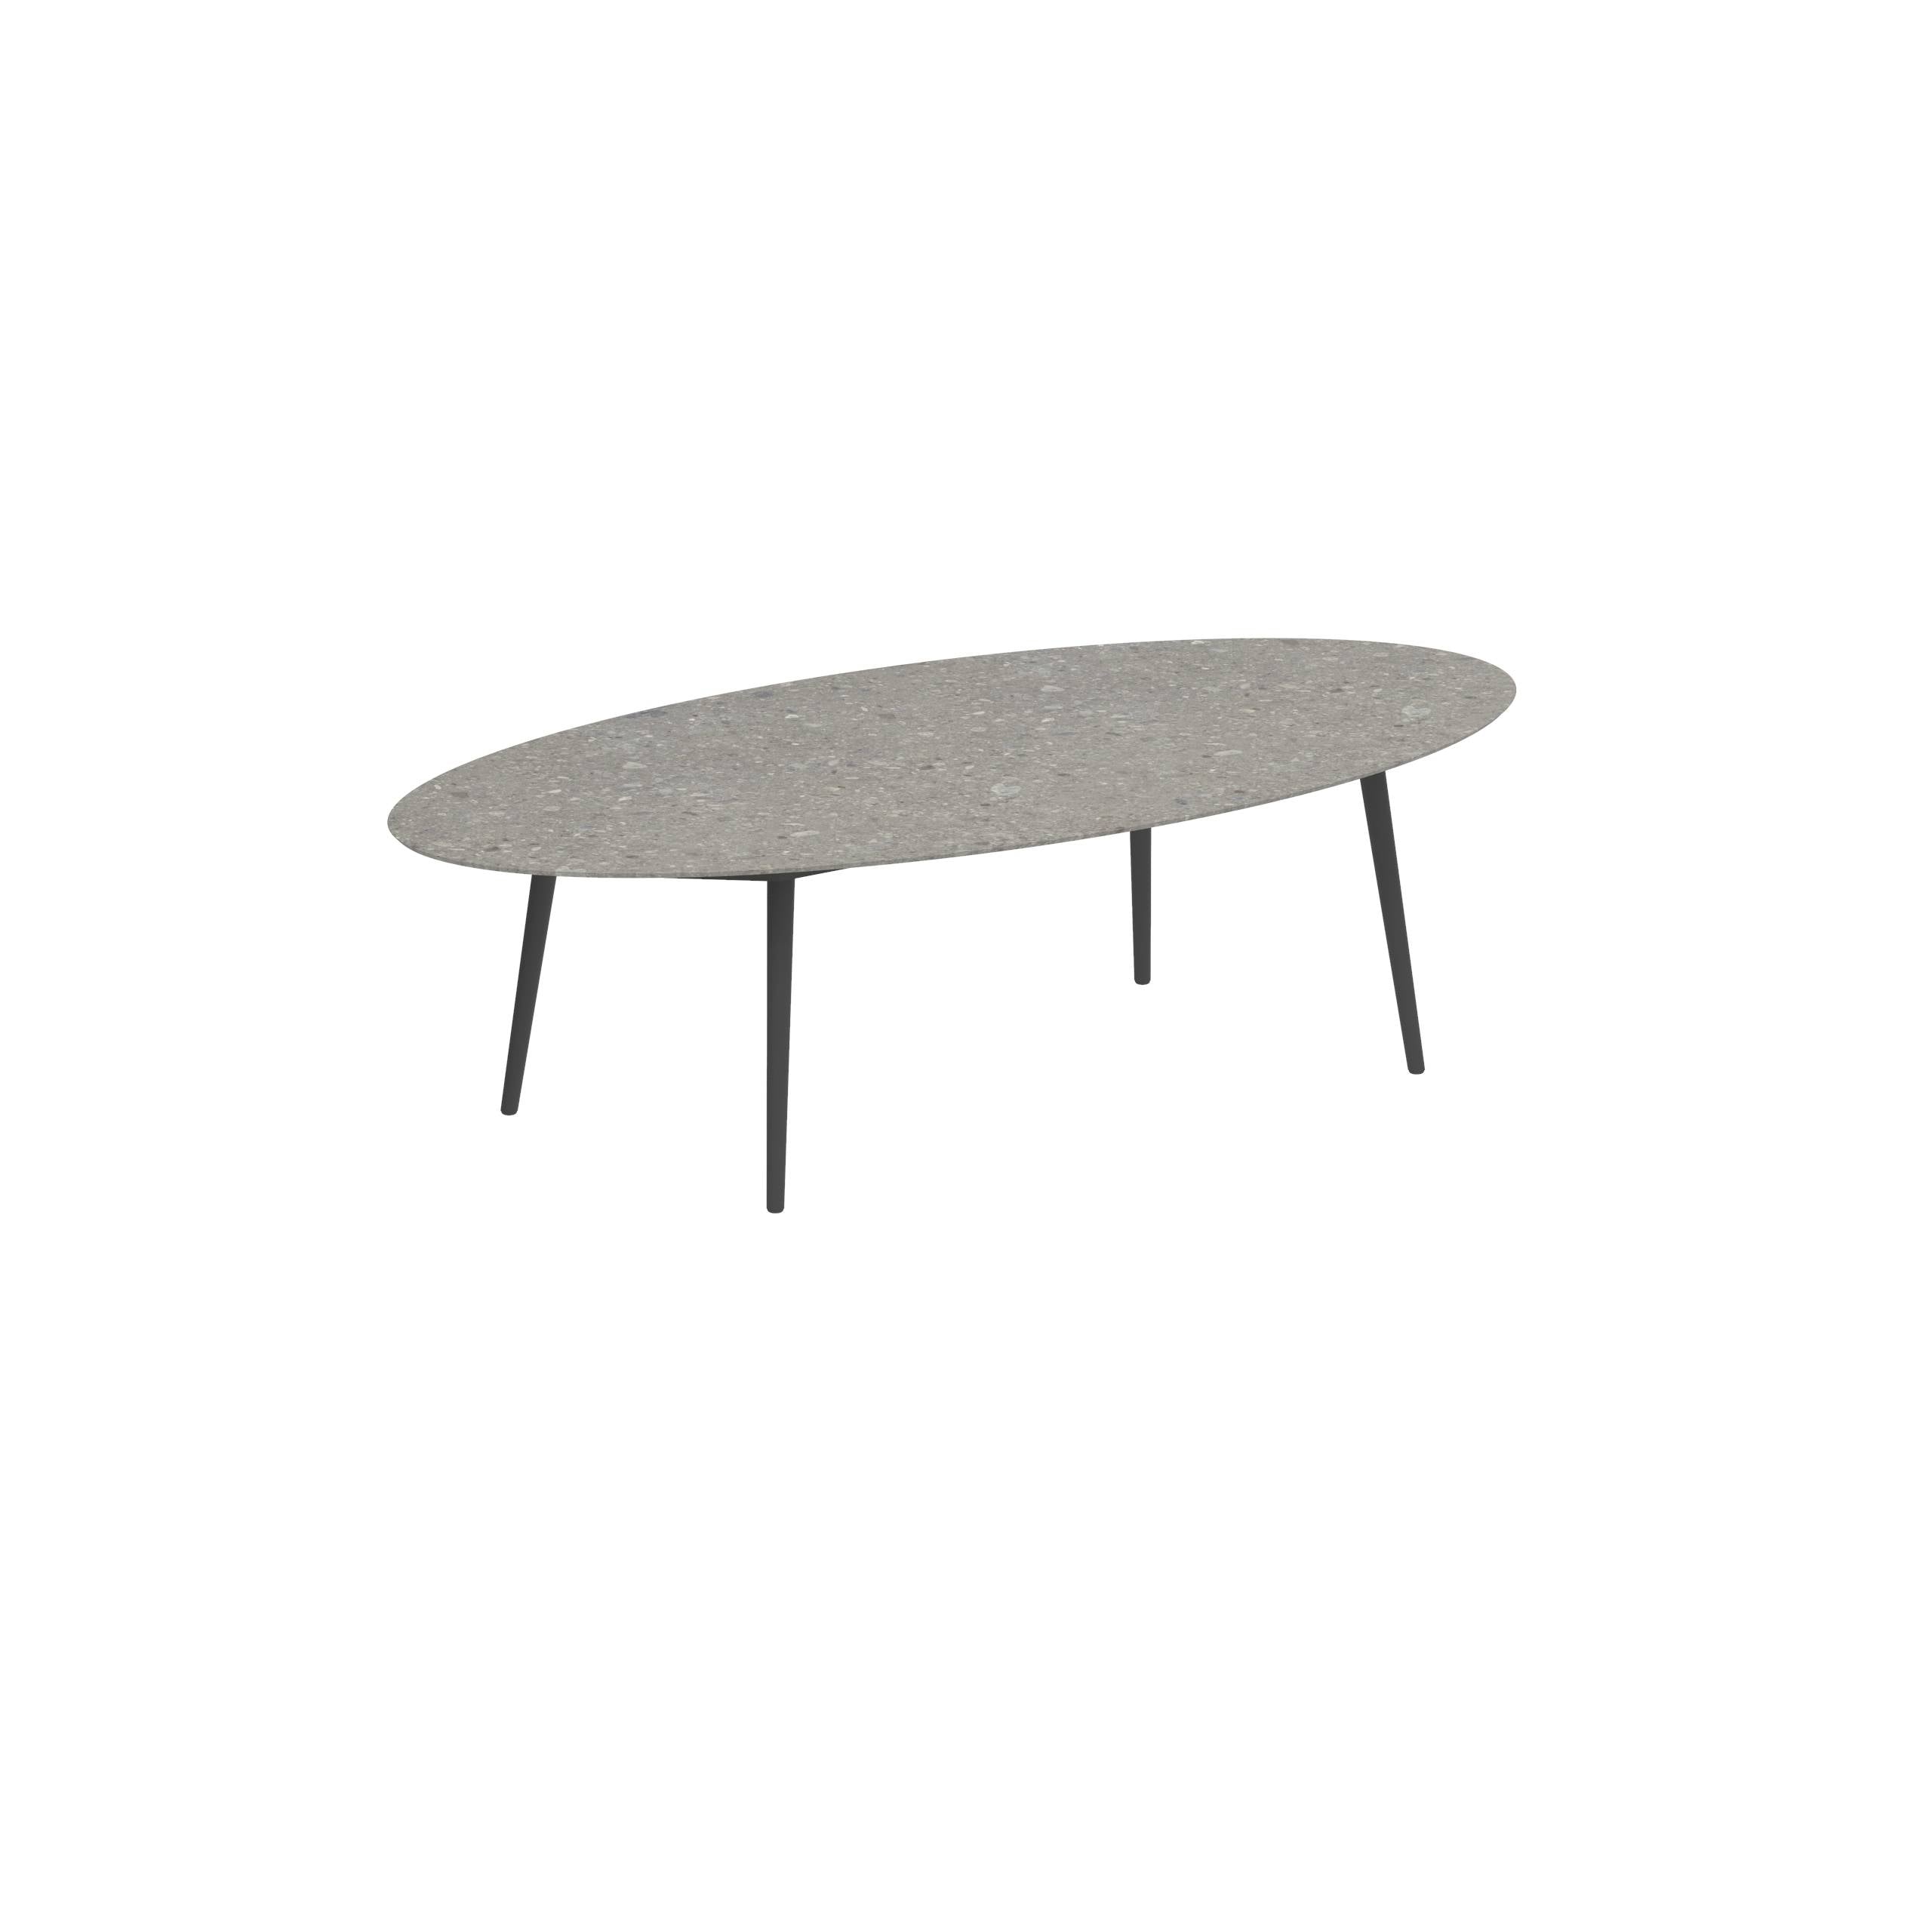 Styletto Low Dining Table 250x130cm Alu Legs Anthracite Ceramic Tabletop Ceppo Dolomitica